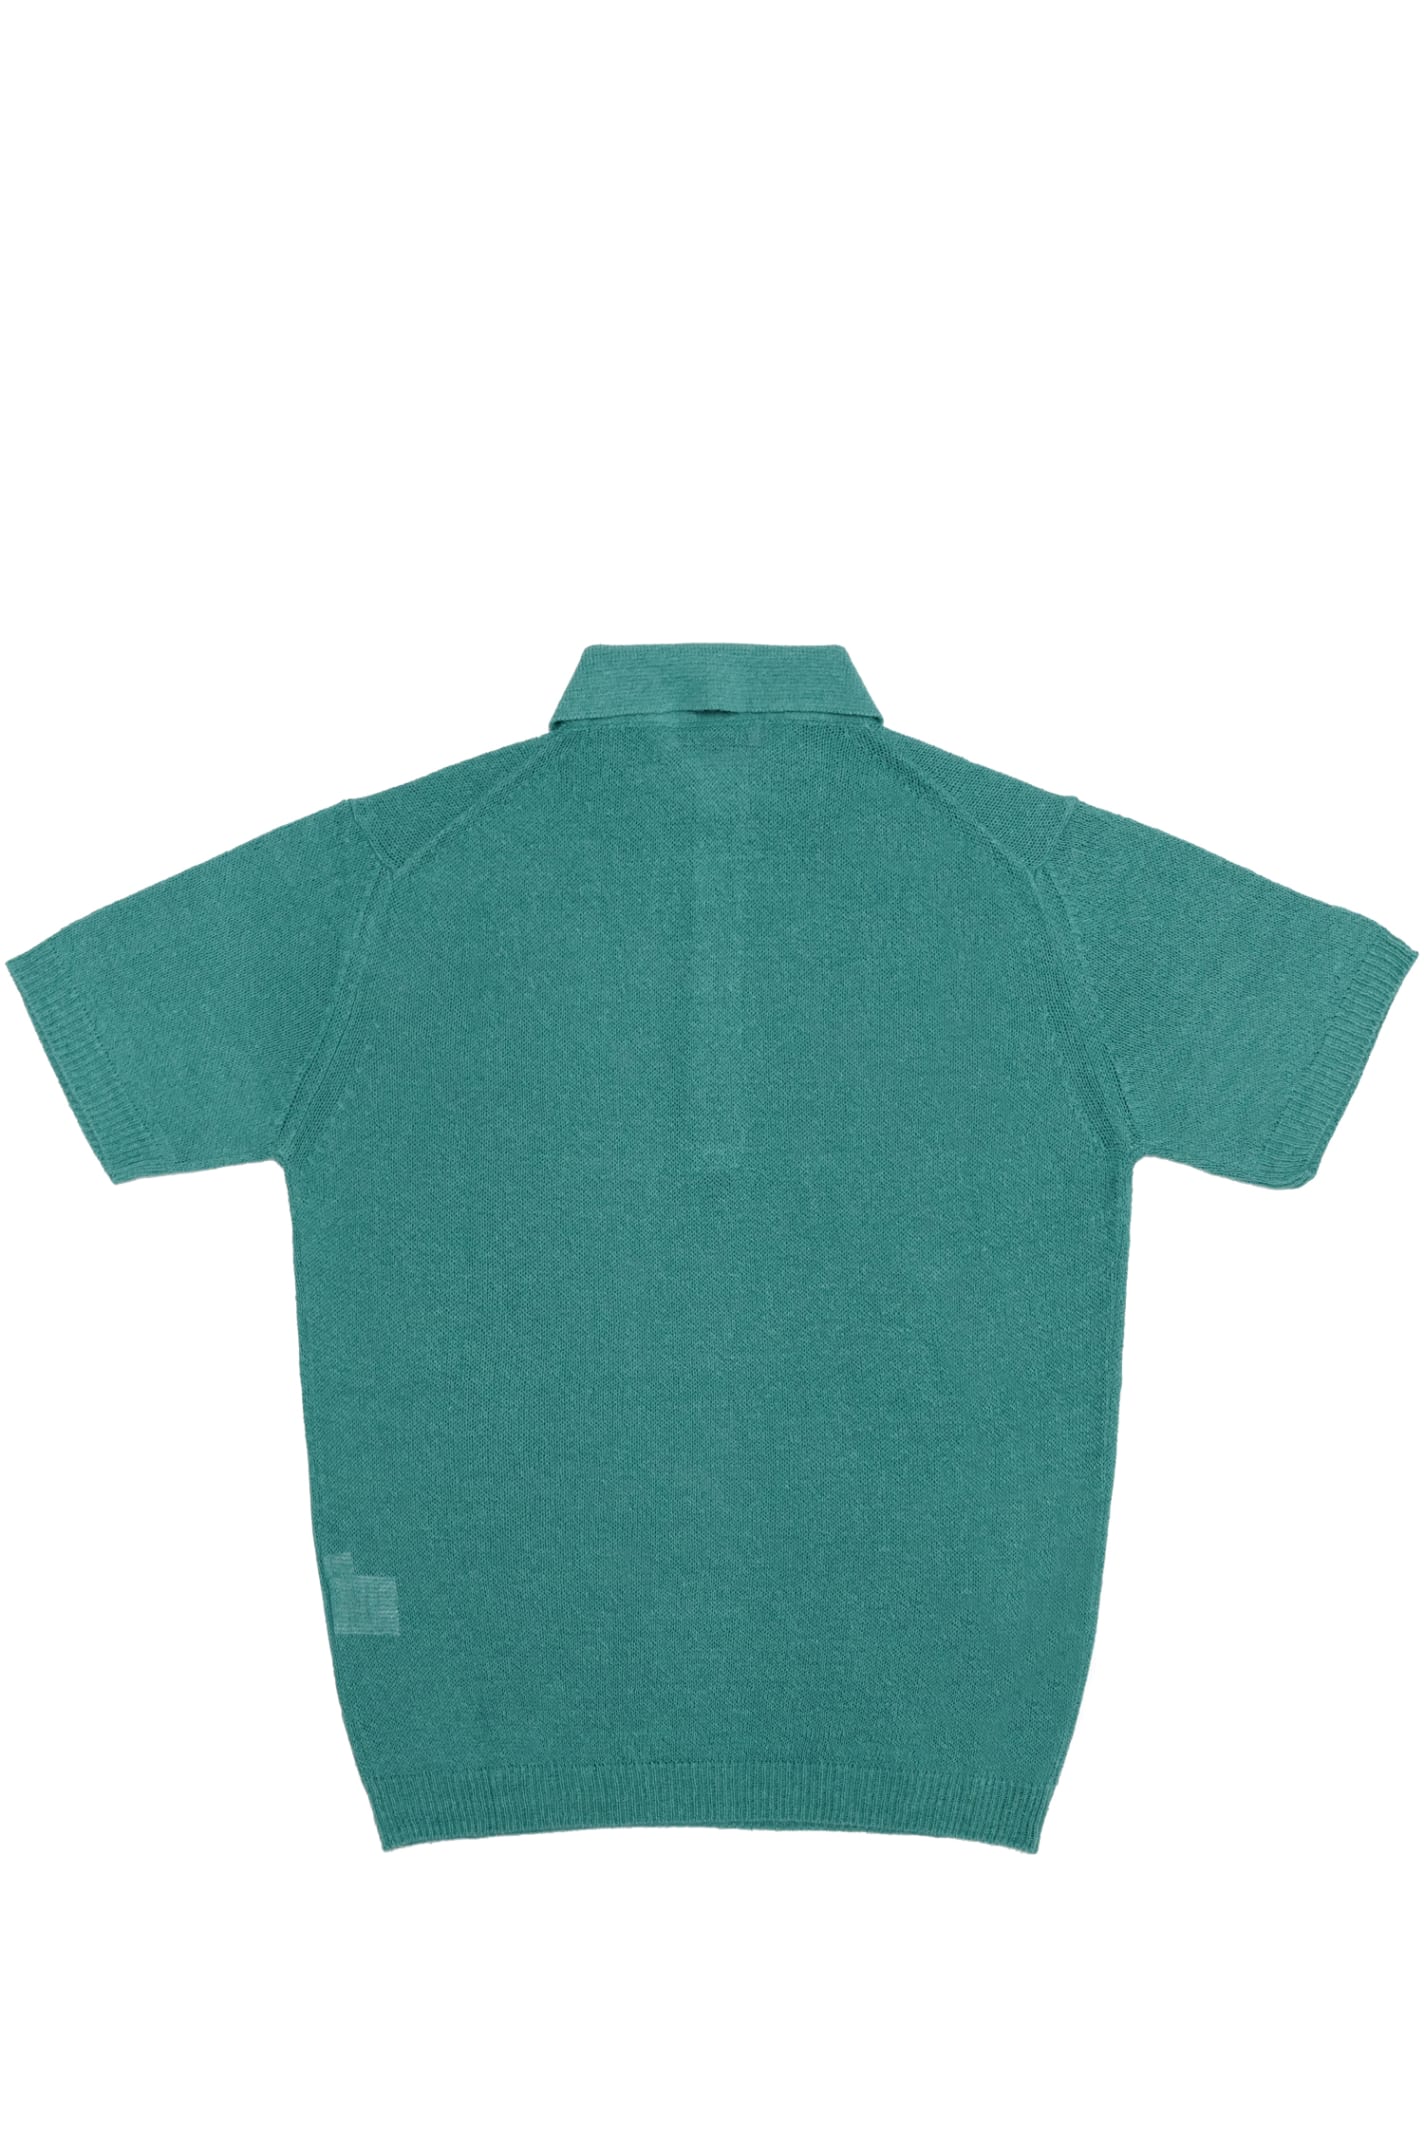 Shop Filippo De Laurentiis Polo Shirt In Turquoise